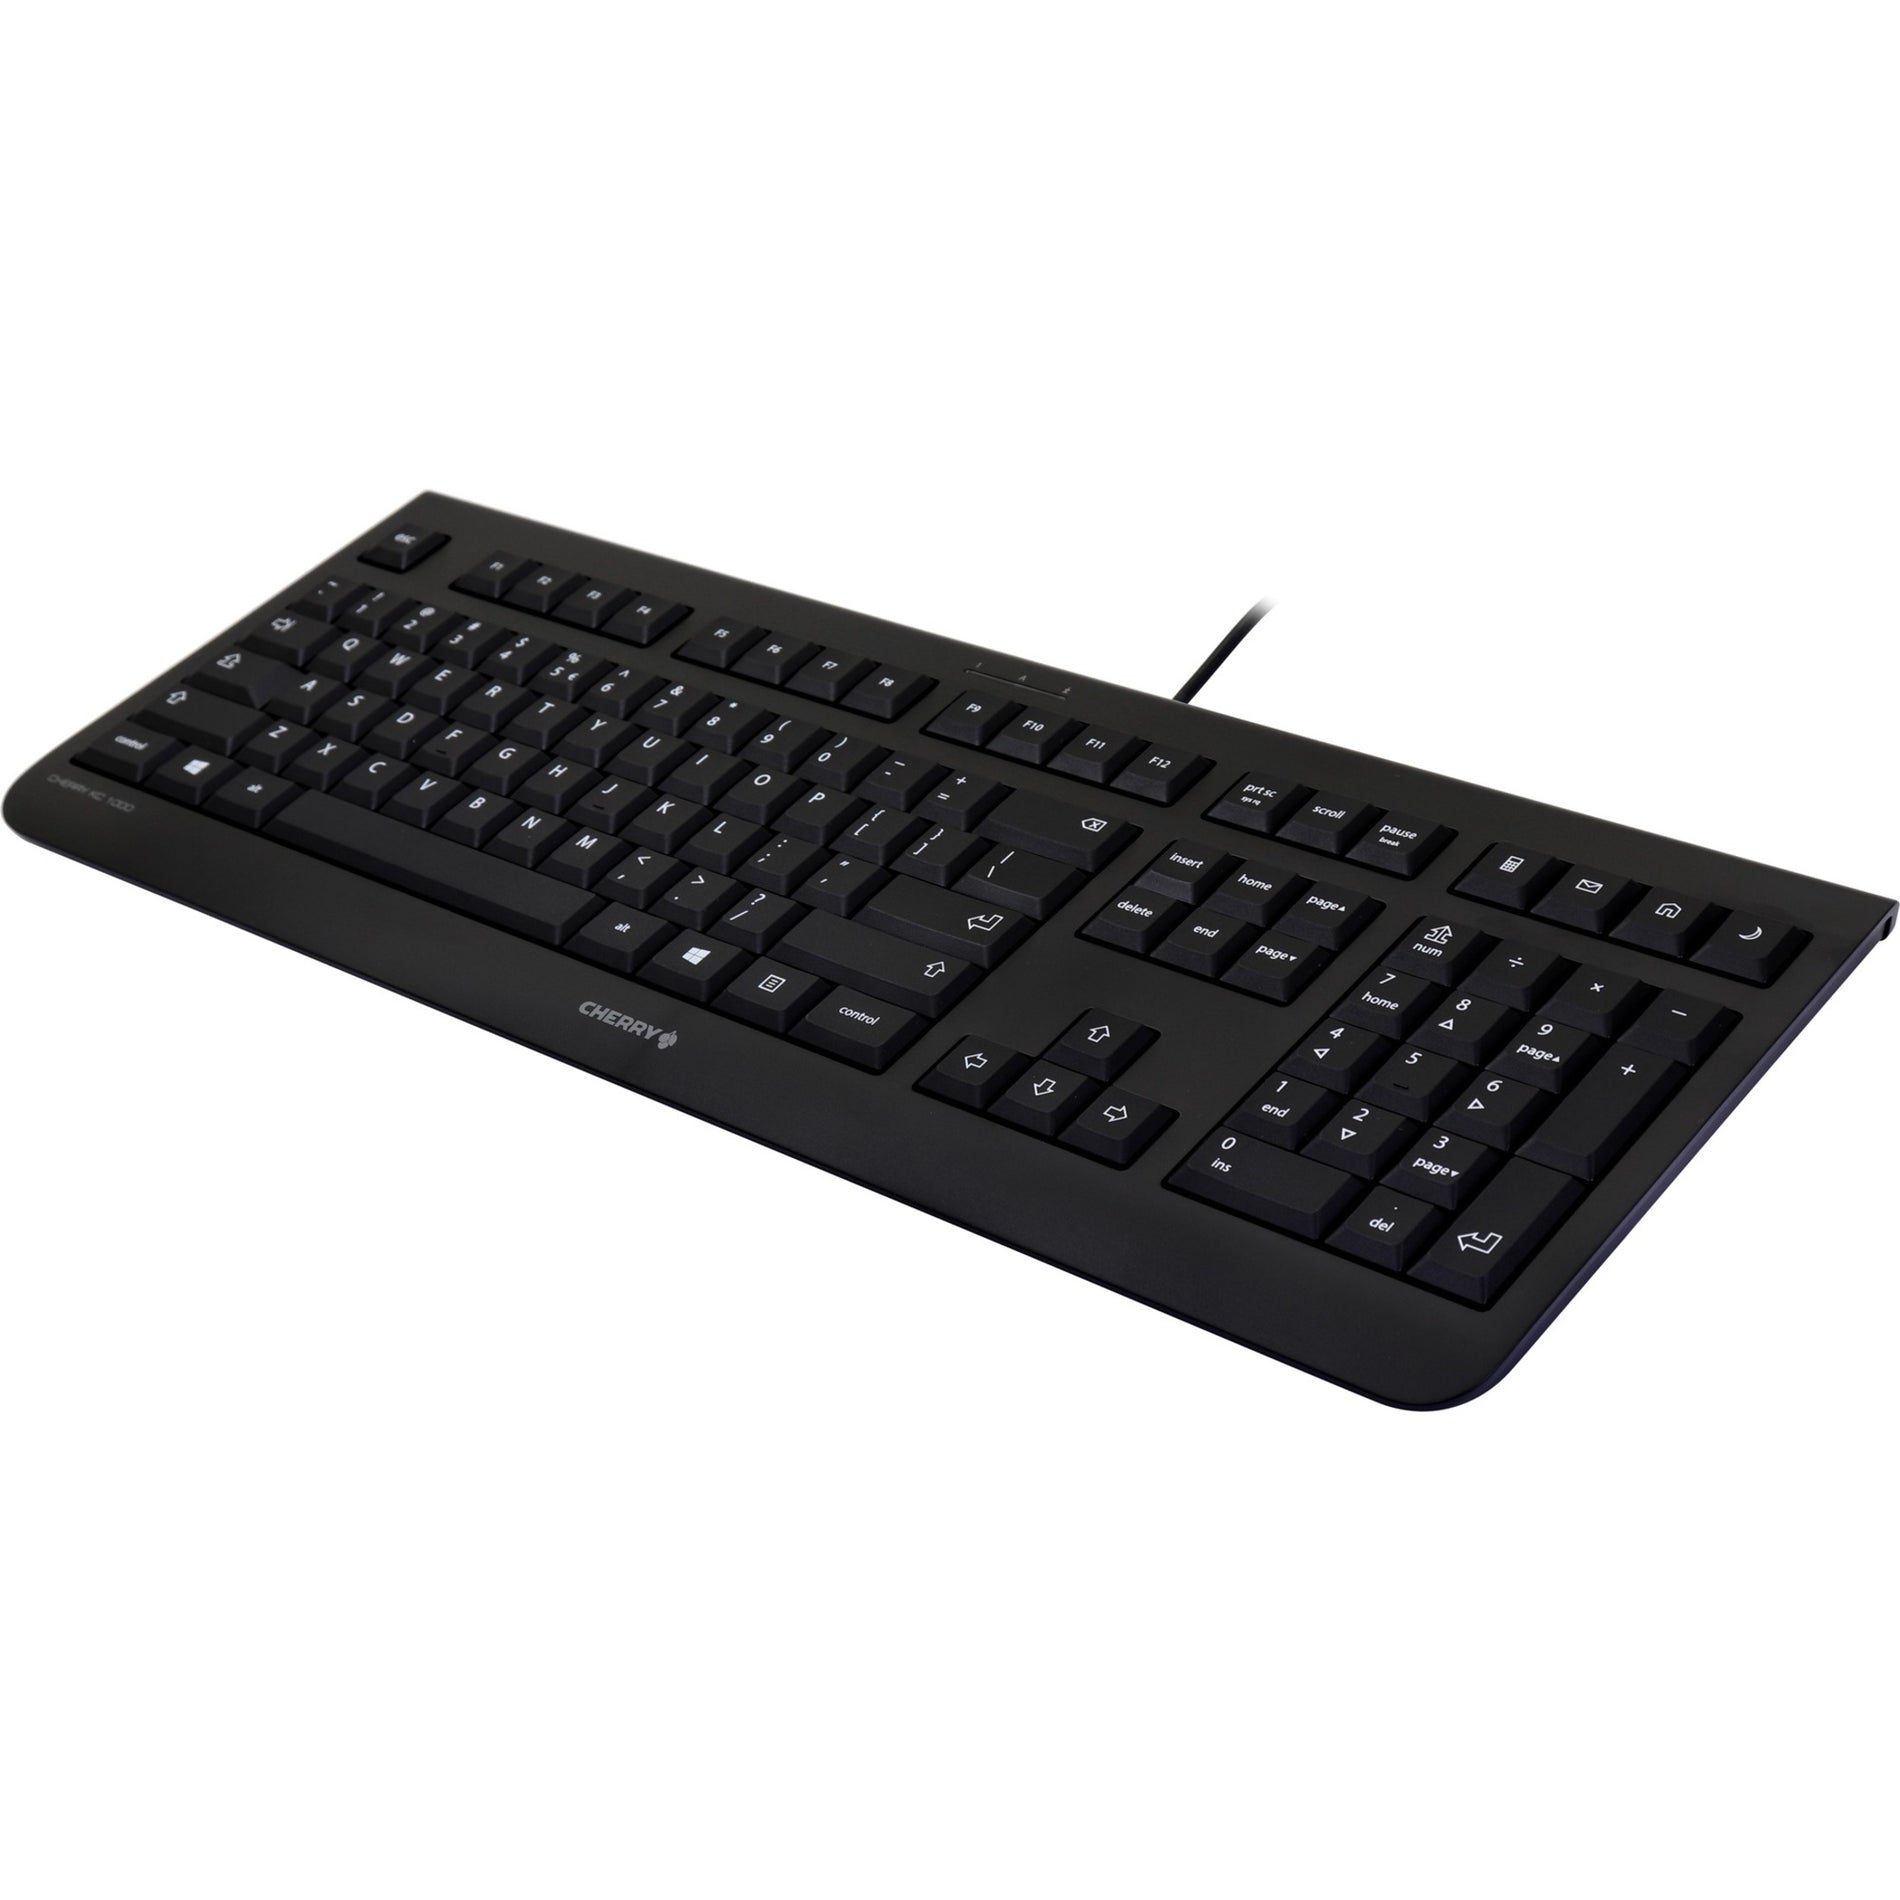 CHERRY JK-0800EU-2 KC 1000 Keyboard, Wired, Black, 3 Year Warranty, QWERTY Layout, USB Interface